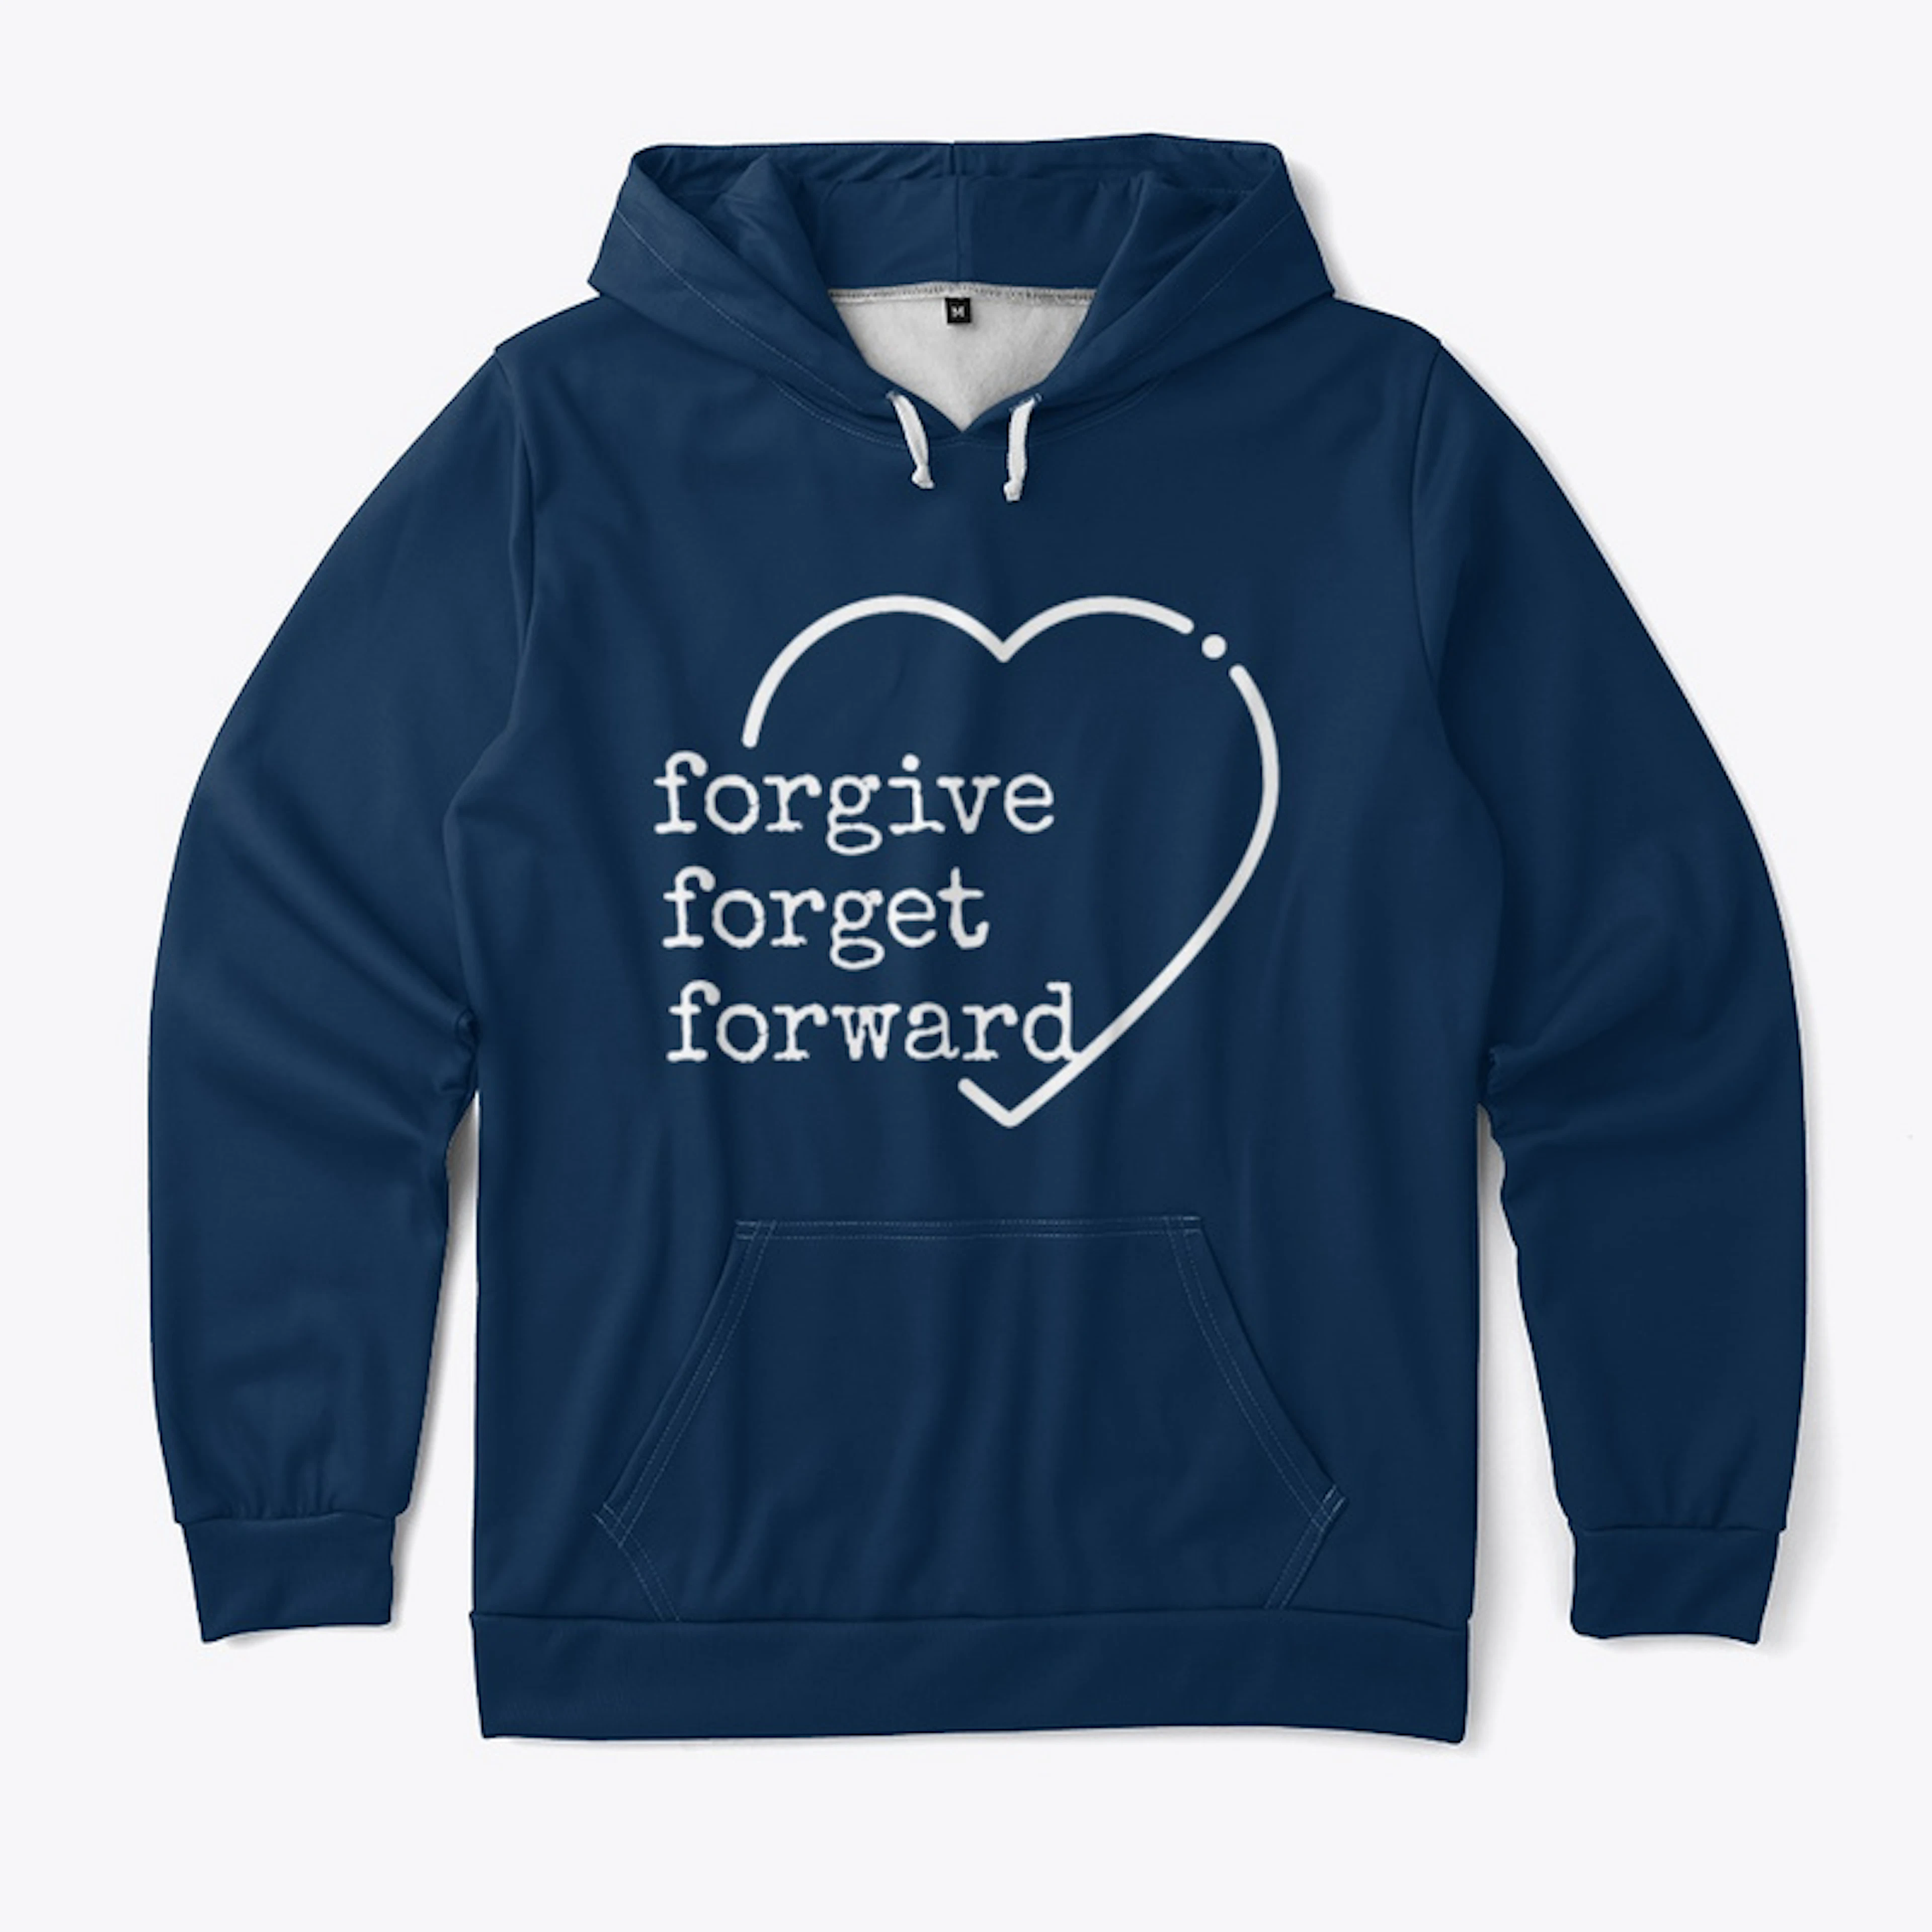 Forgive, Forget, Forward.